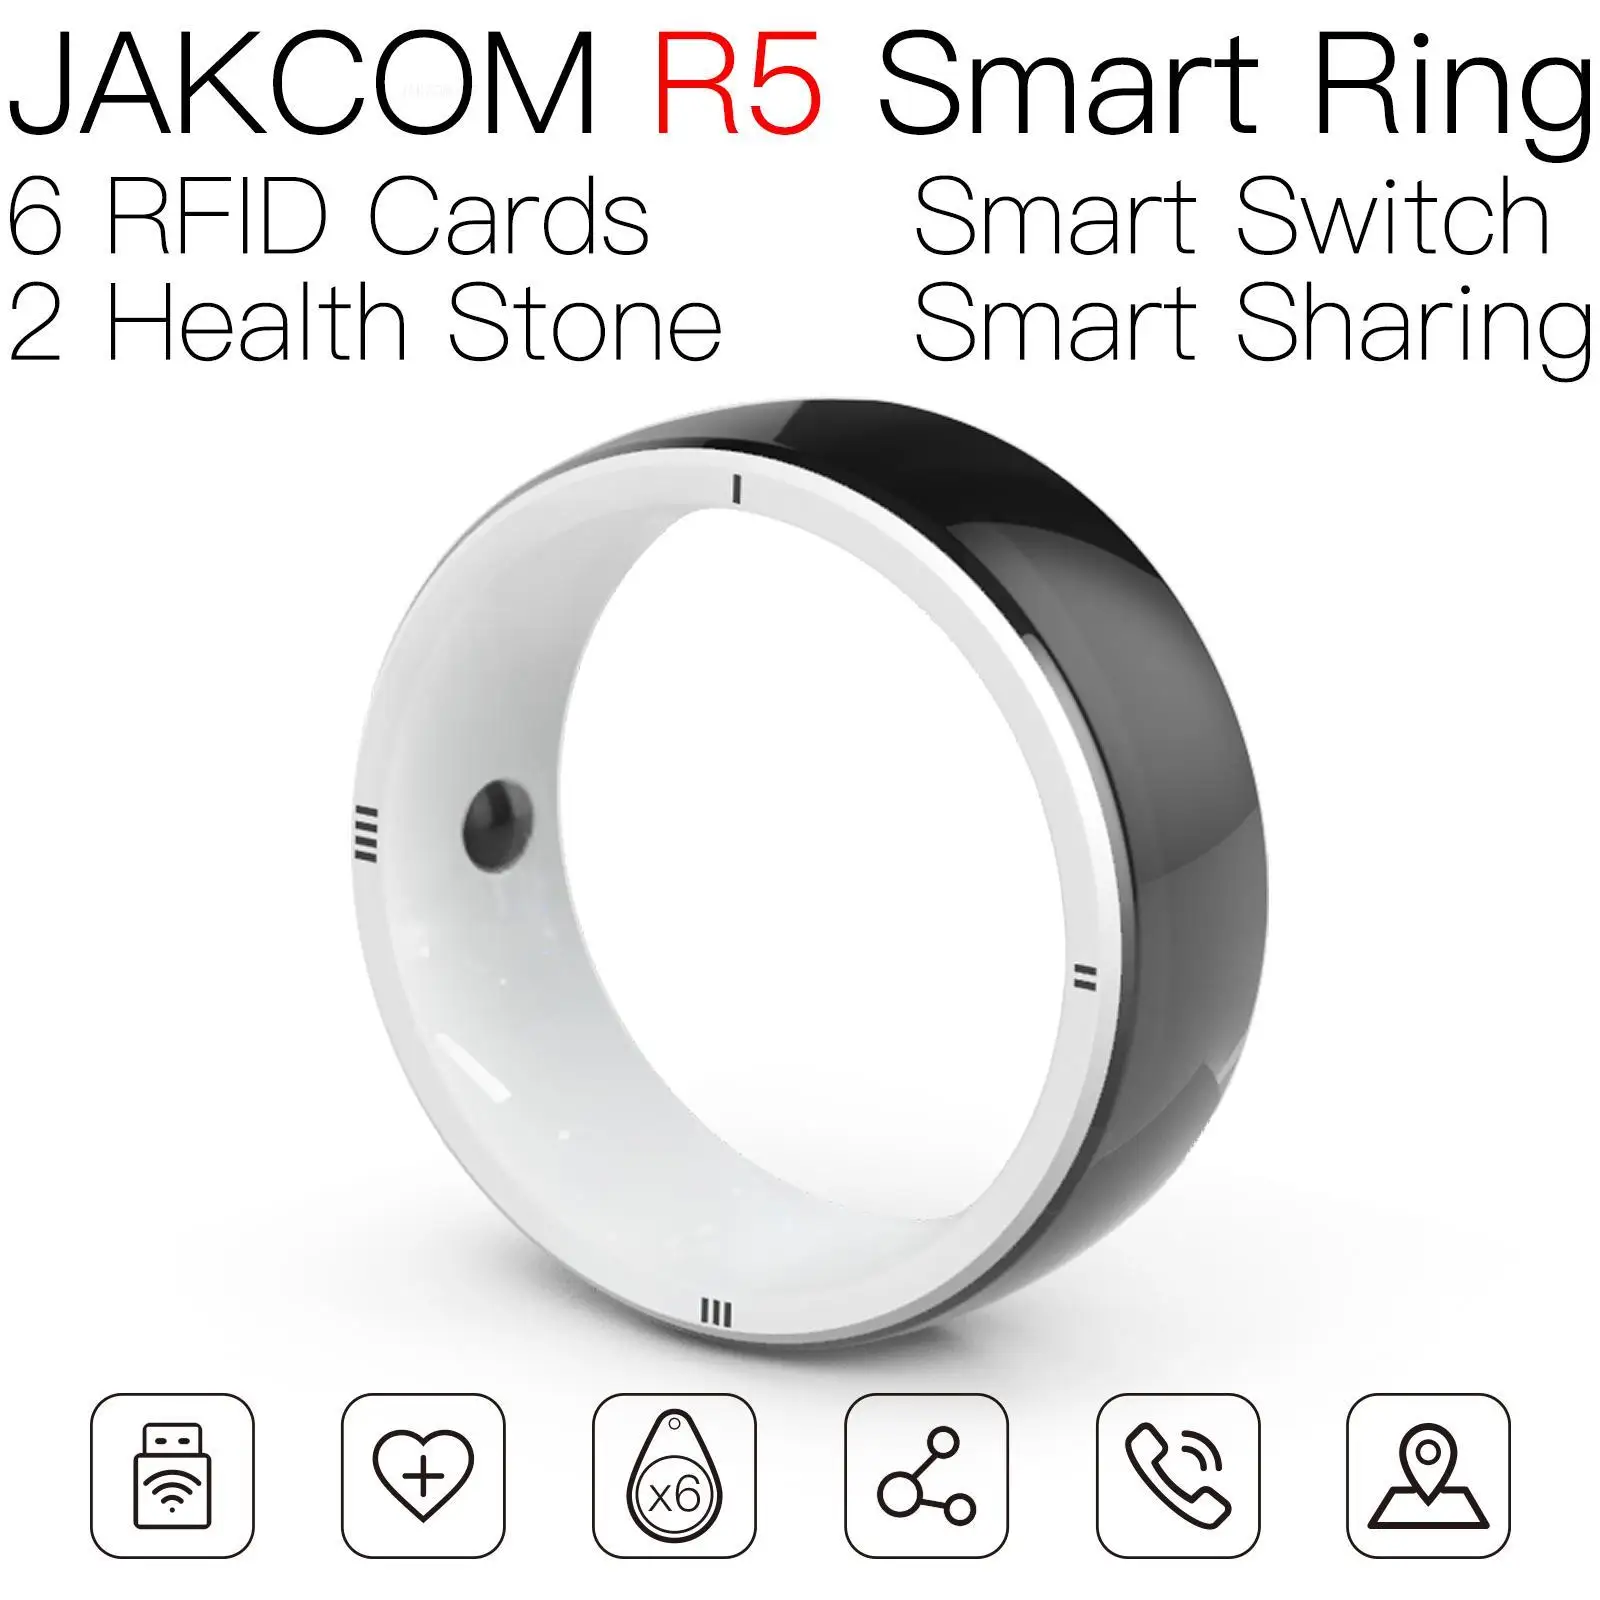 

JAKCOM R5 Smart Ring New arrival as circle joy monitor smartfone finger bot smart remote controls dstike deauther watch v3